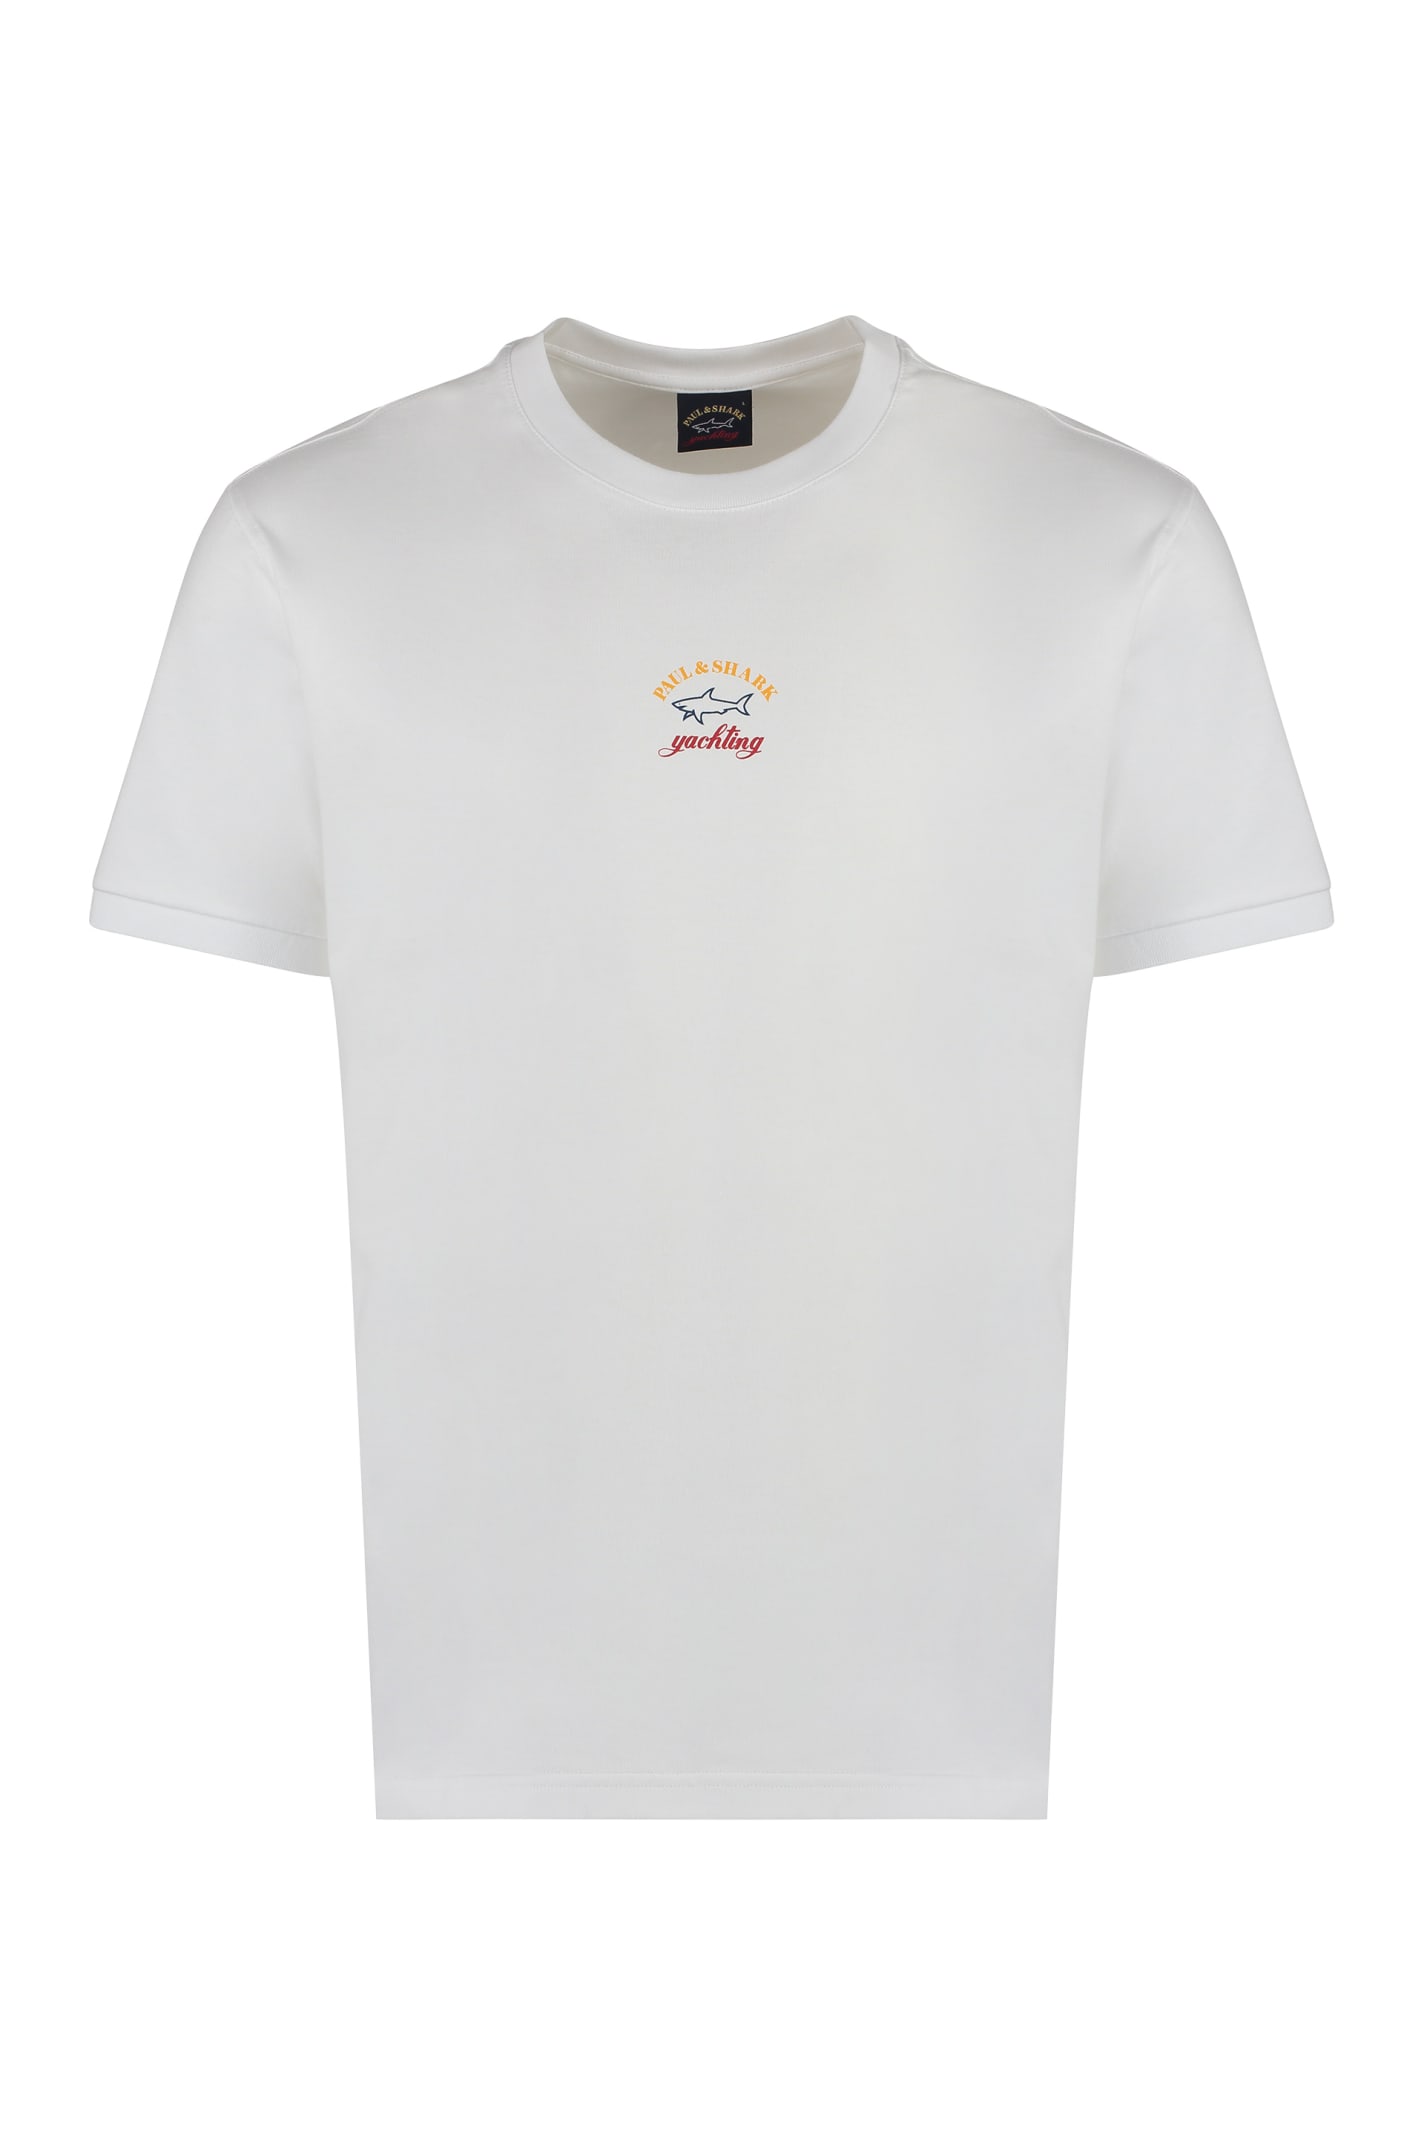 Paul&amp;shark Logo Cotton T-shirt